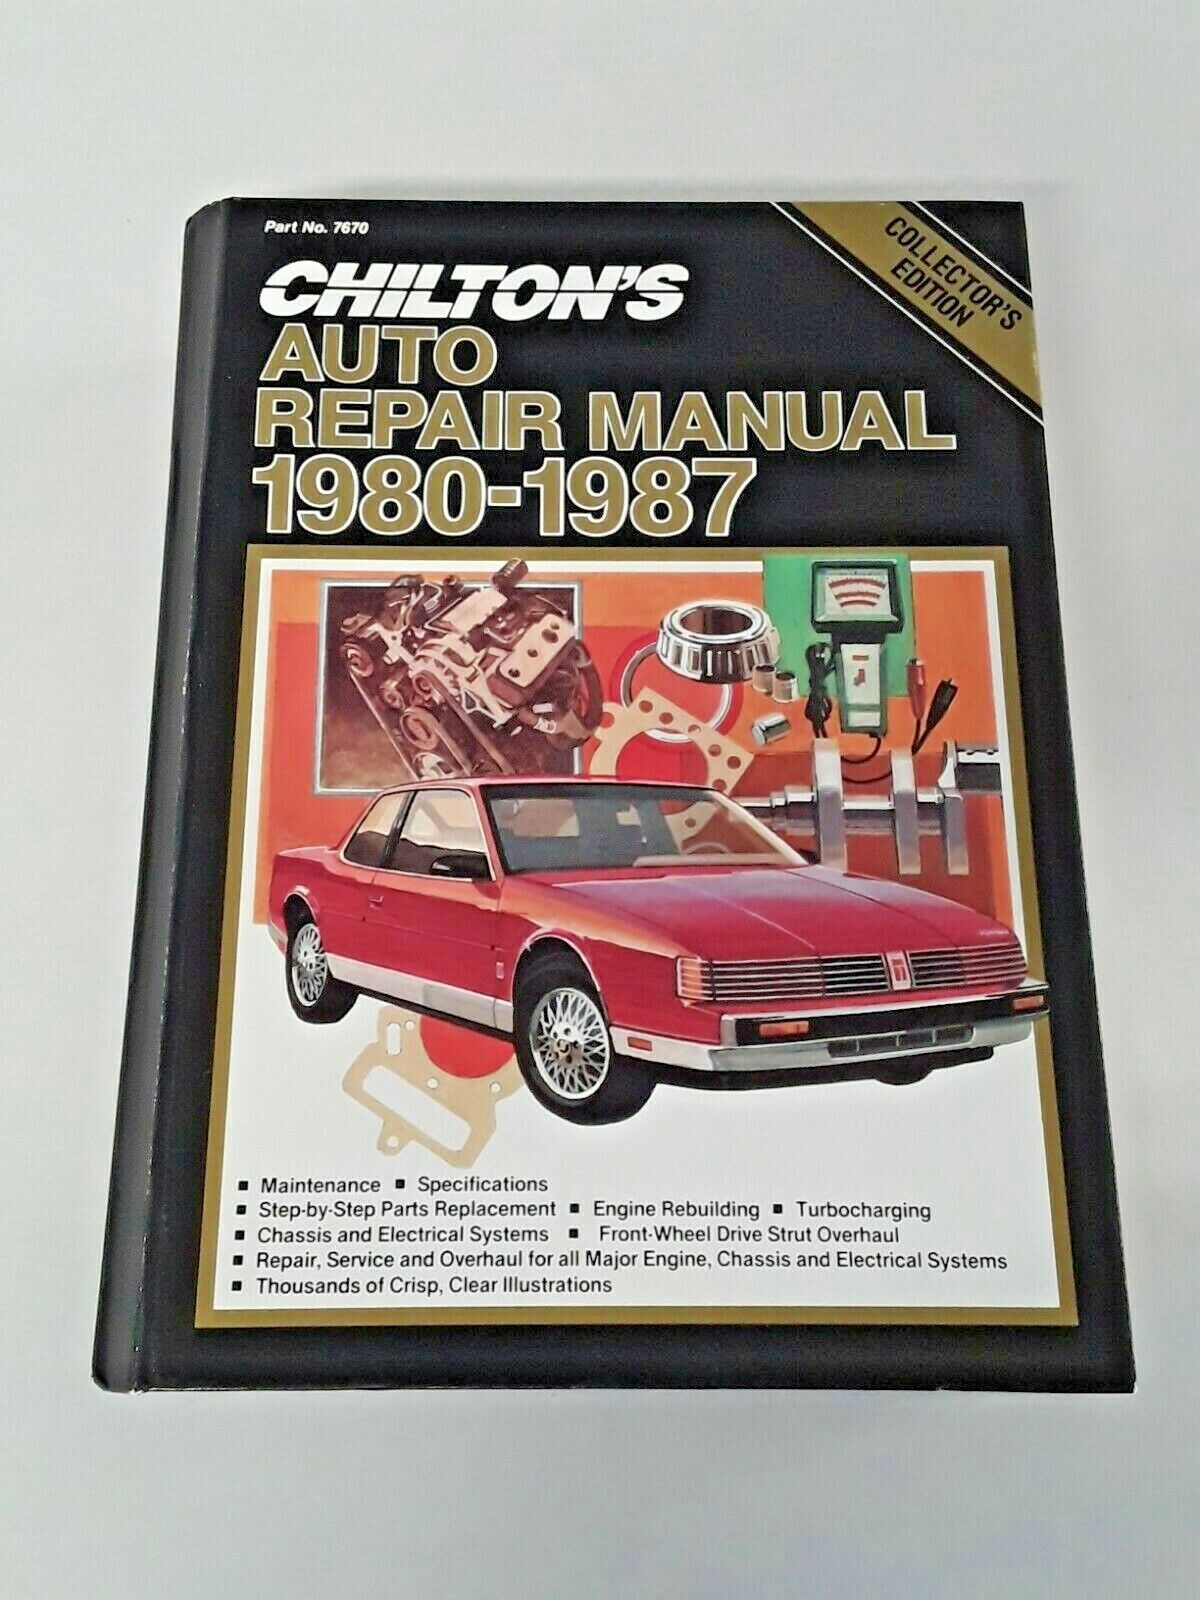 Chilton's Auto Repair Manual 1980-1987 Vintage Book